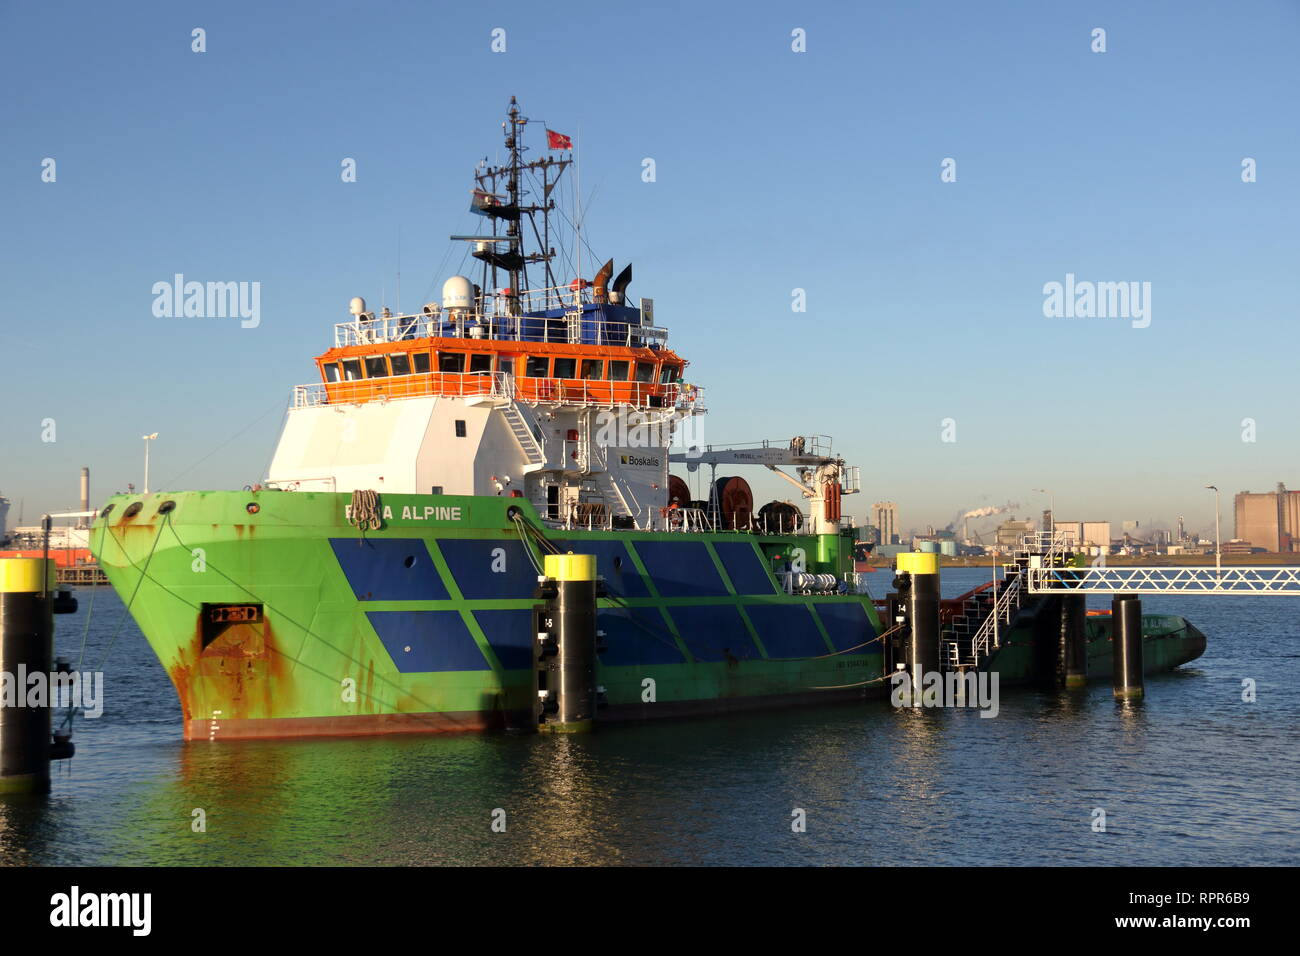 The Offshore tugboat Boka Alpine will be docked in Rotterdam harbor on 15 February 2019. Stock Photo